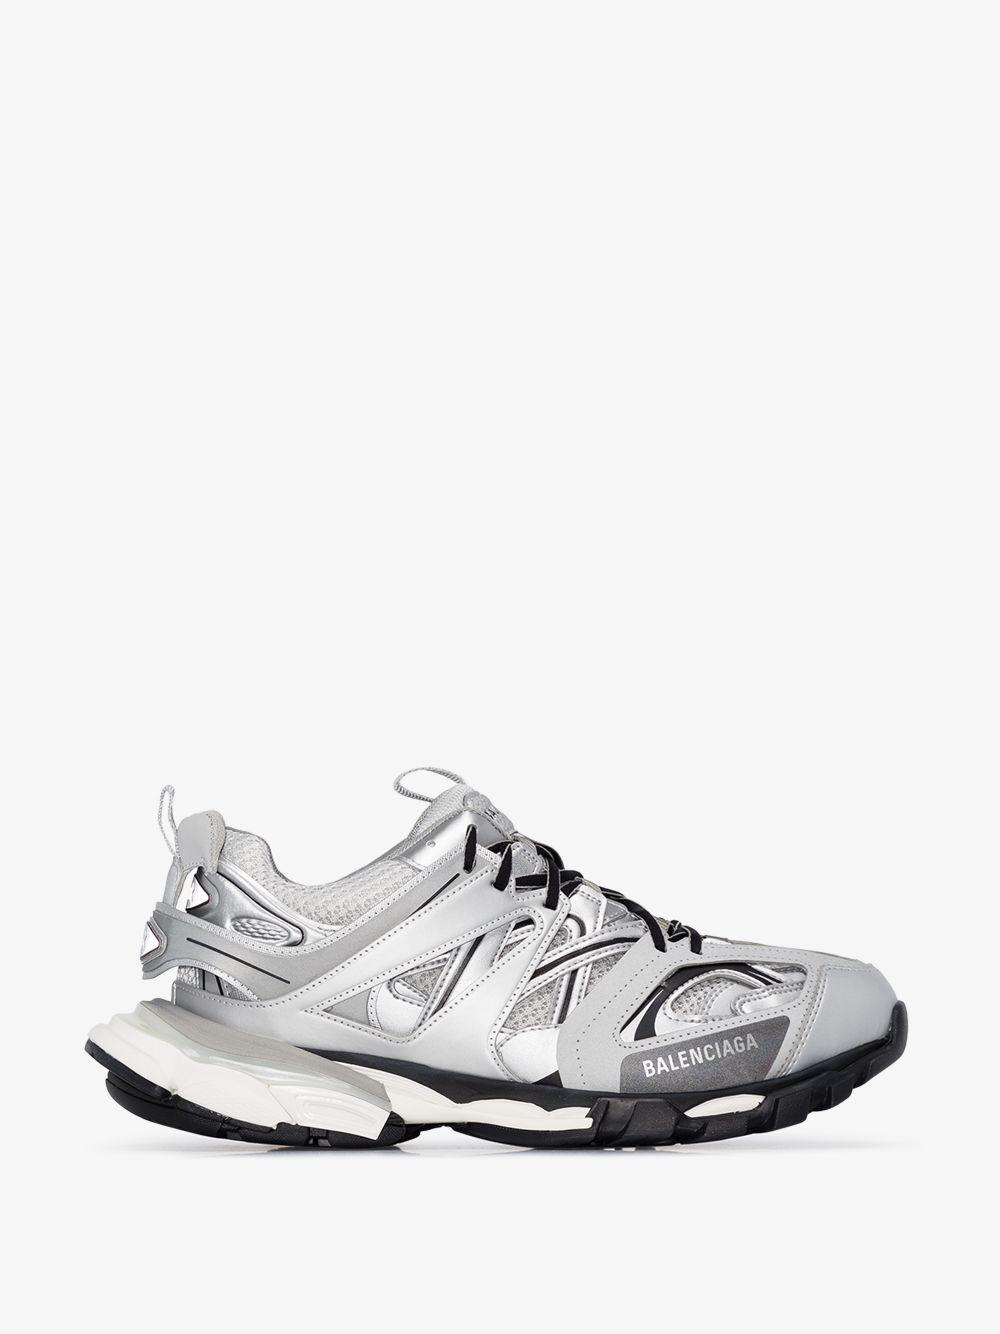 Sold Don039t buy Balenciaga Track Sneakers Silver Metallic 40 EU 7 US  Display  eBay